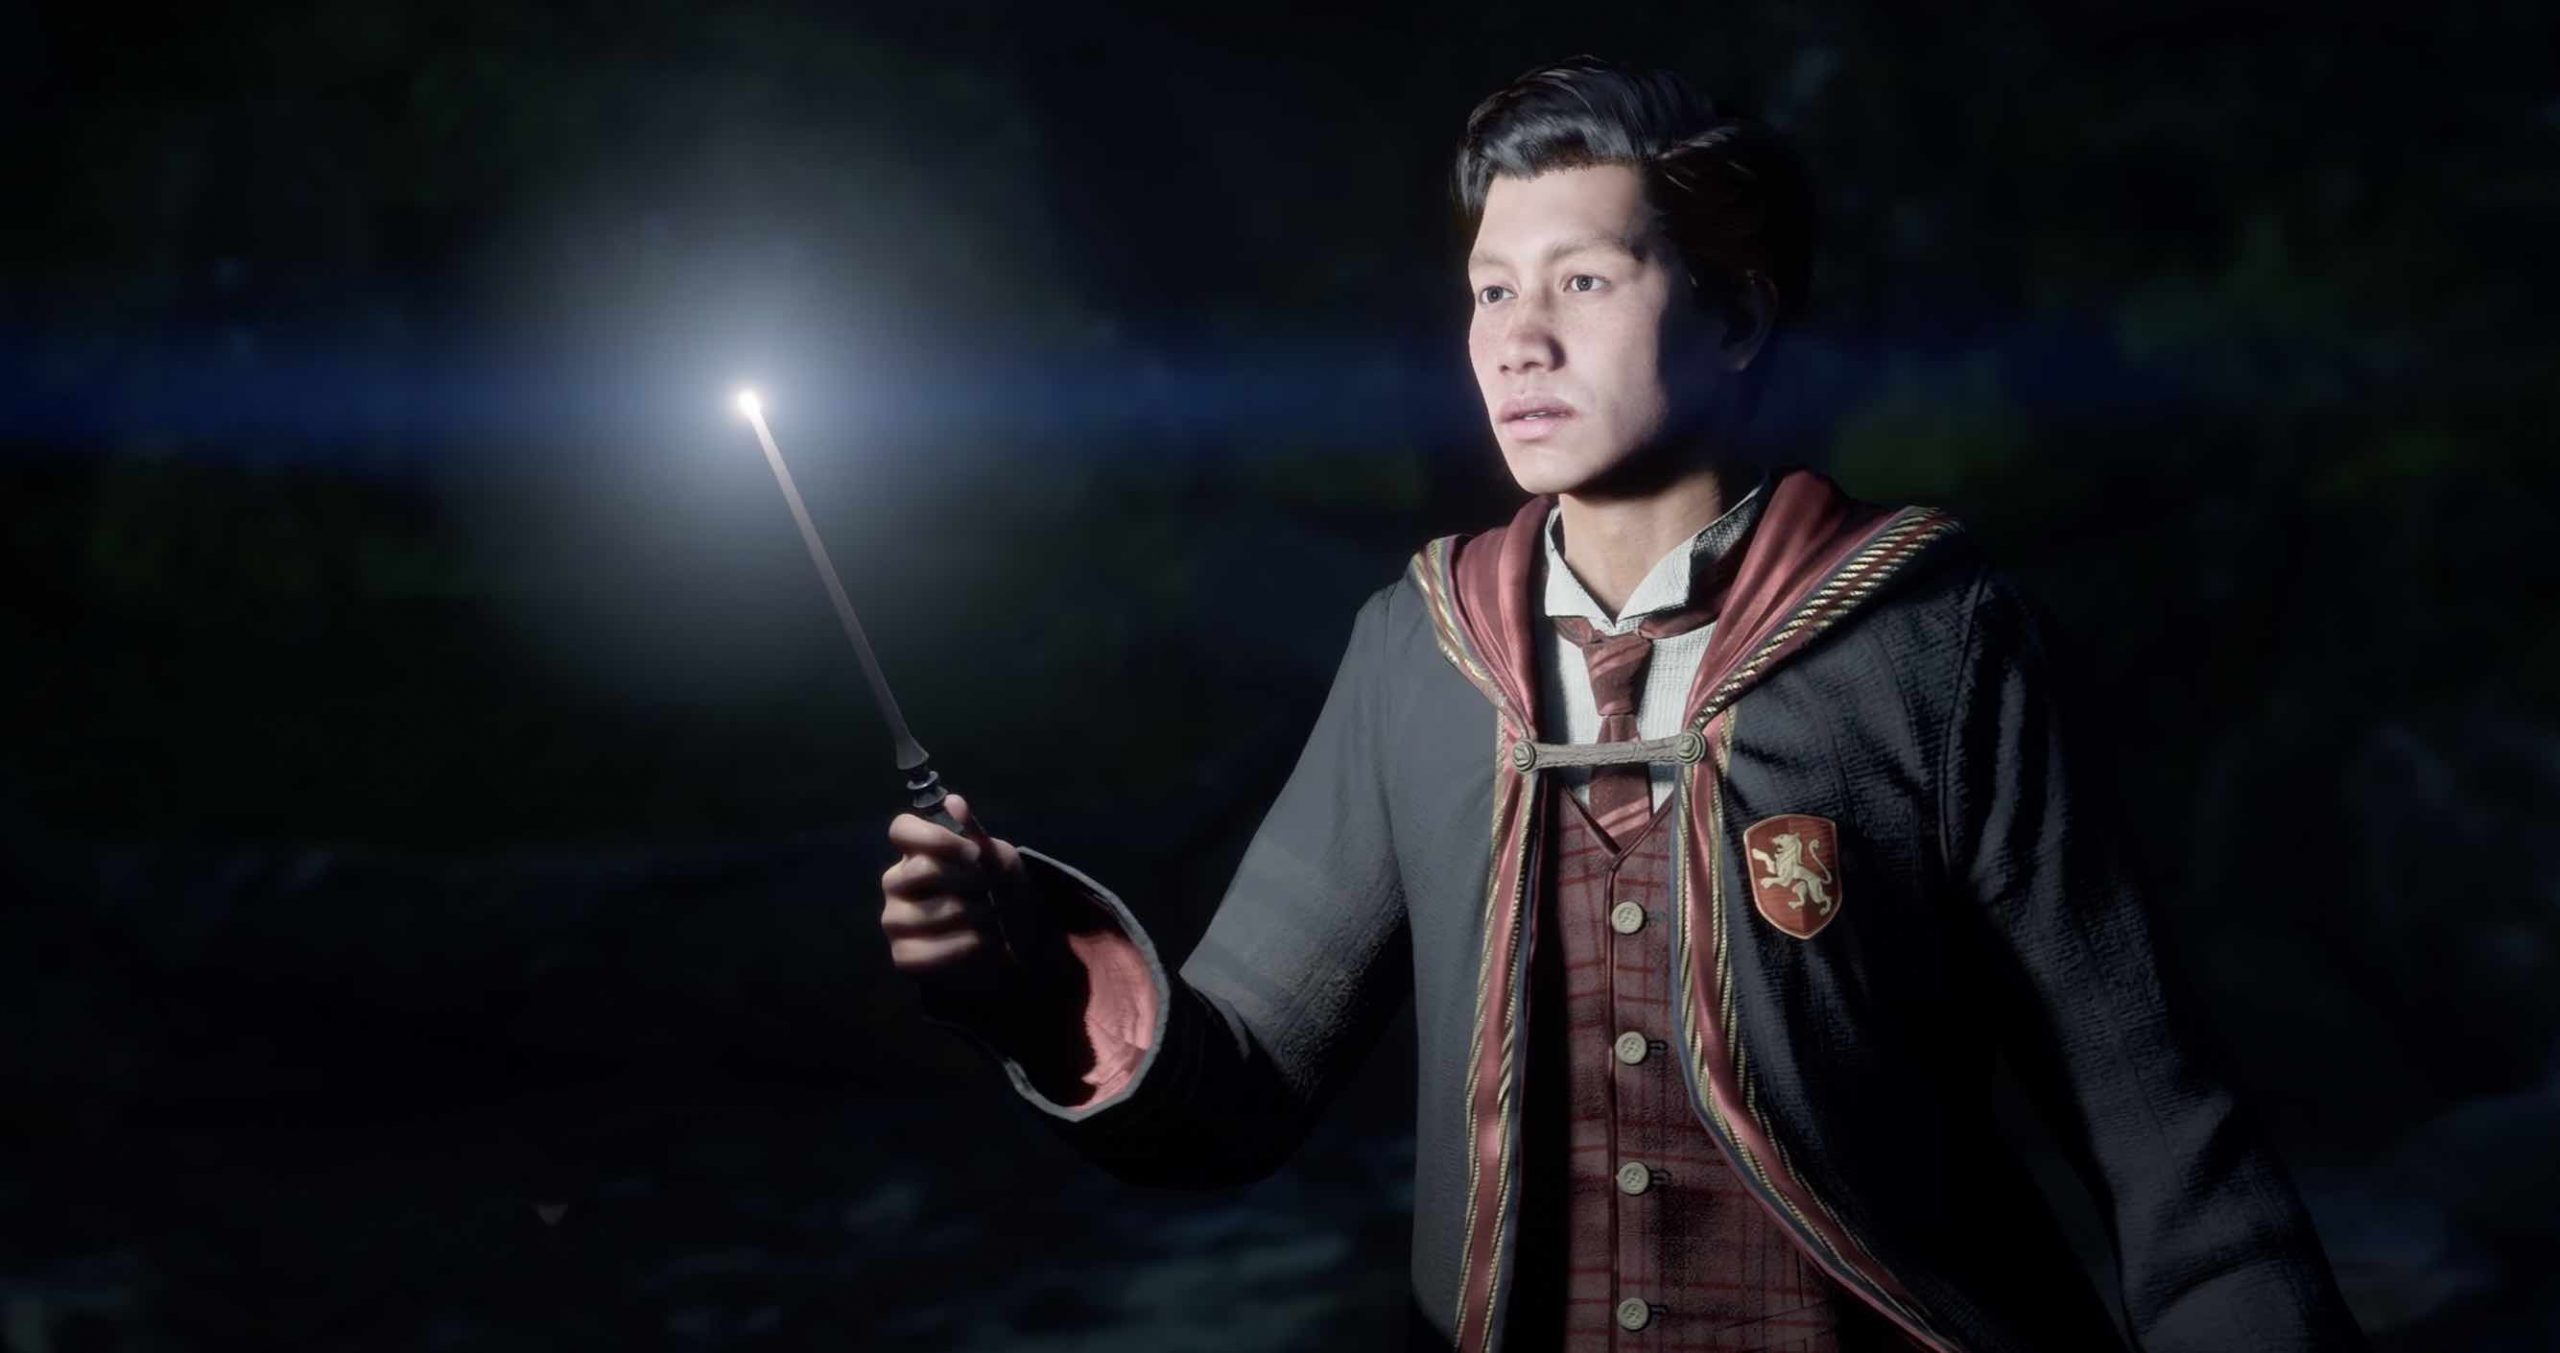 Hogwarts Legacy A Harry Potter RPG Revealed - Fextralife